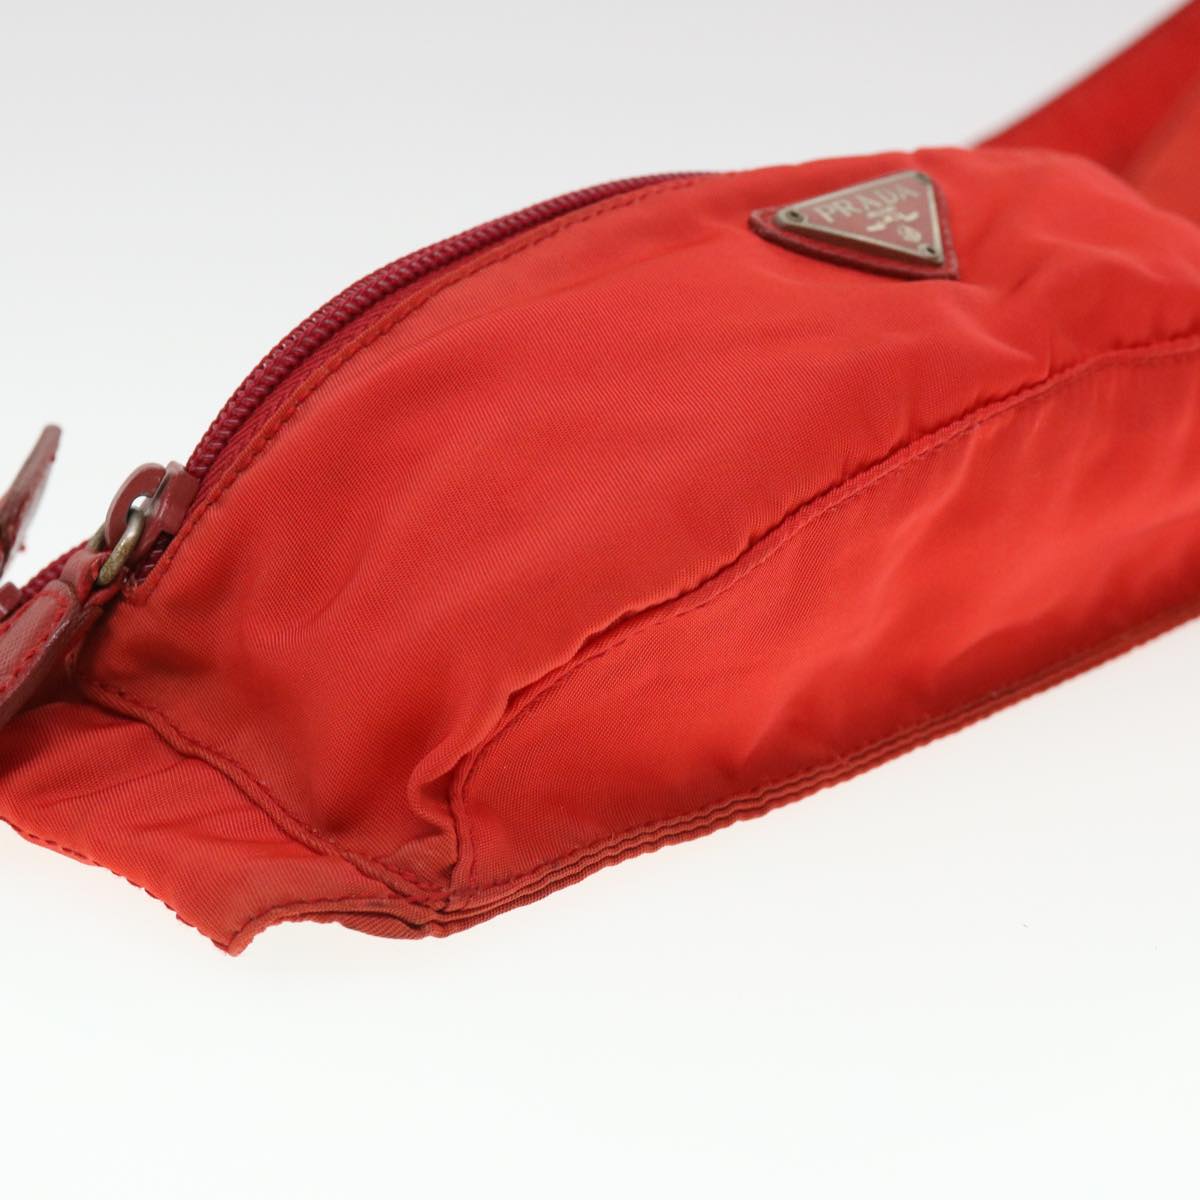 PRADA Waist Bag Nylon Red Auth 39613